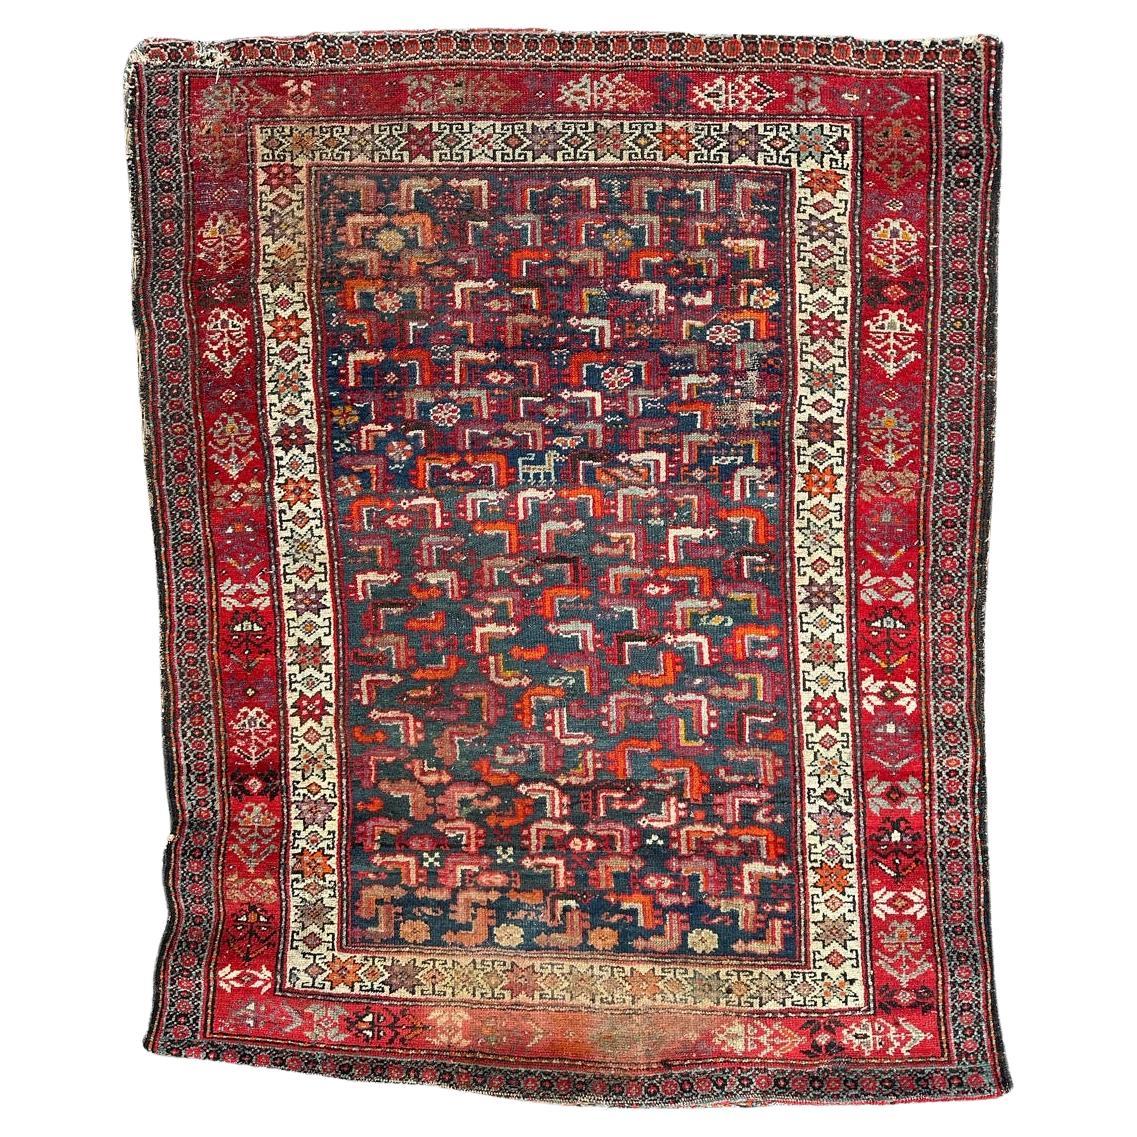 Bobyrug’s pretty antique distressed malayer rug